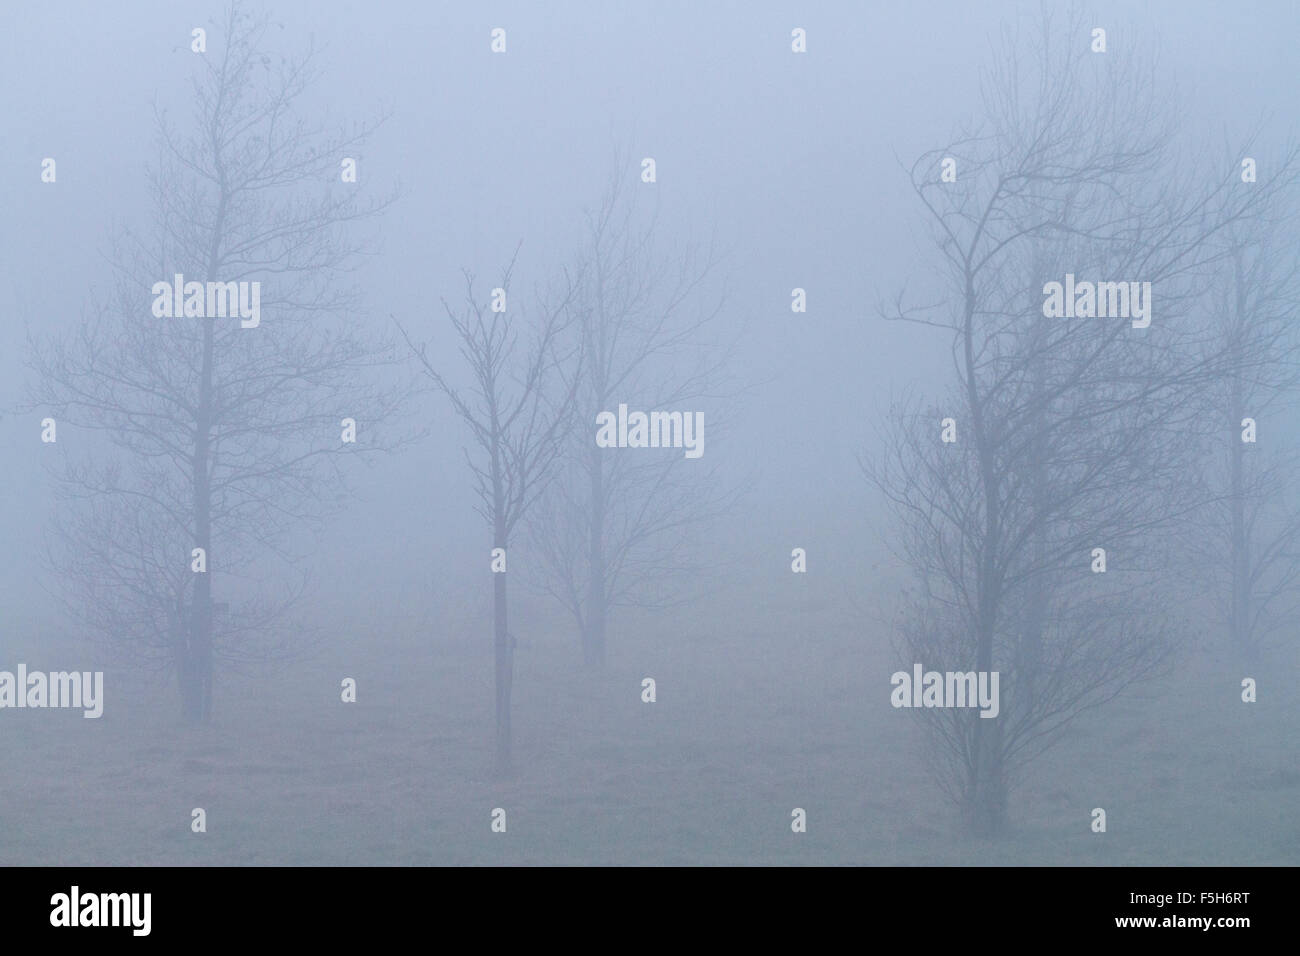 Karge Winterbäume im Nebel - Querformat Stockfoto